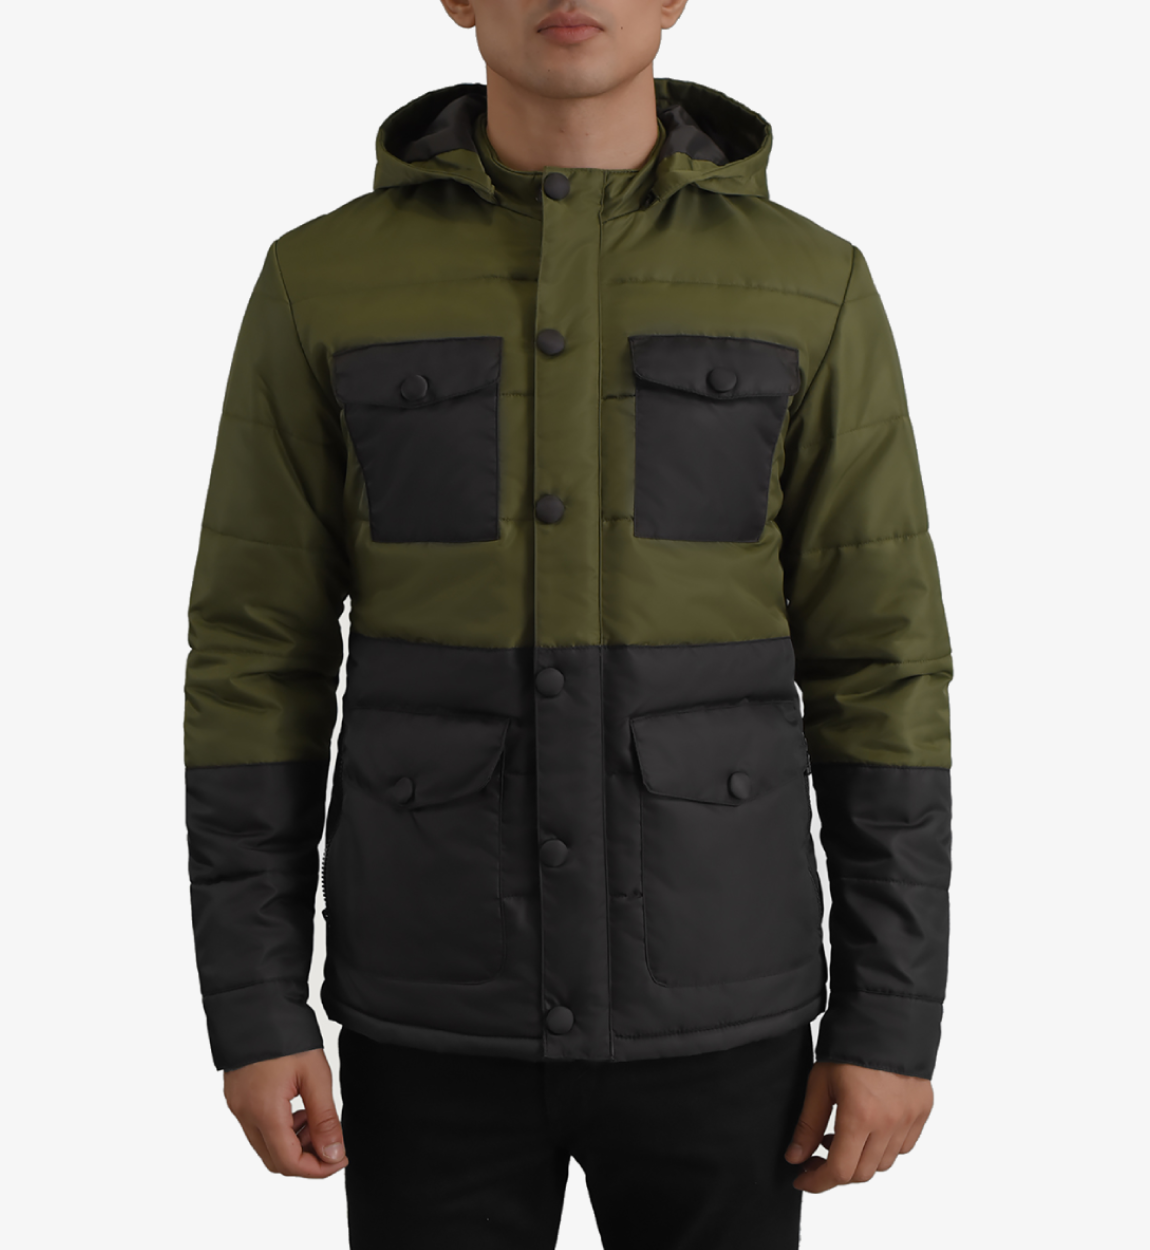 Black & green Hooded Puffer Jacket Tendon Sports